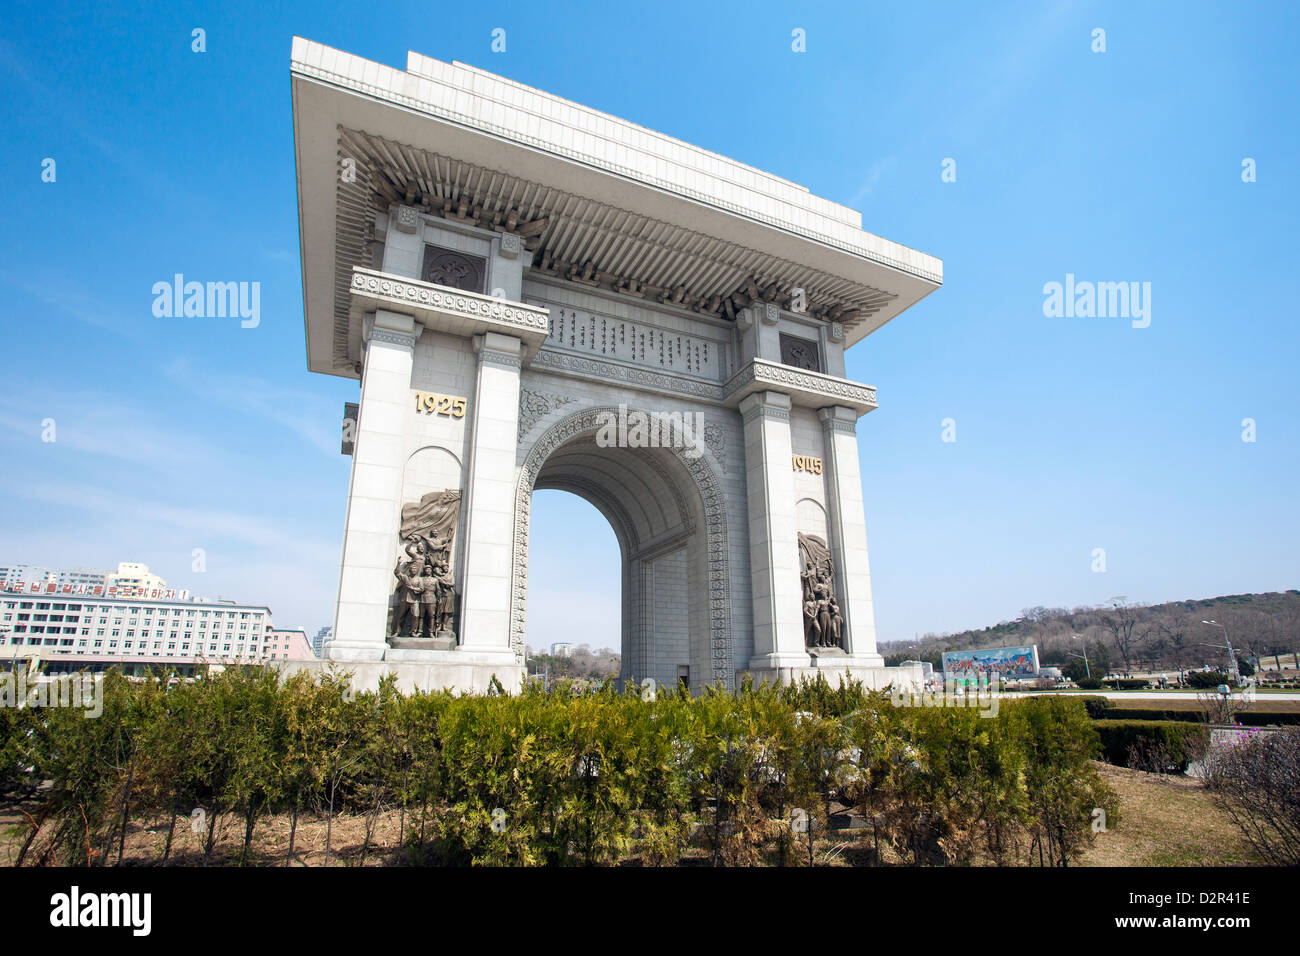 Arch of Triumph, 3m higher than the Arc de Triomphe in Paris, Pyongyang, North Korea Stock Photo